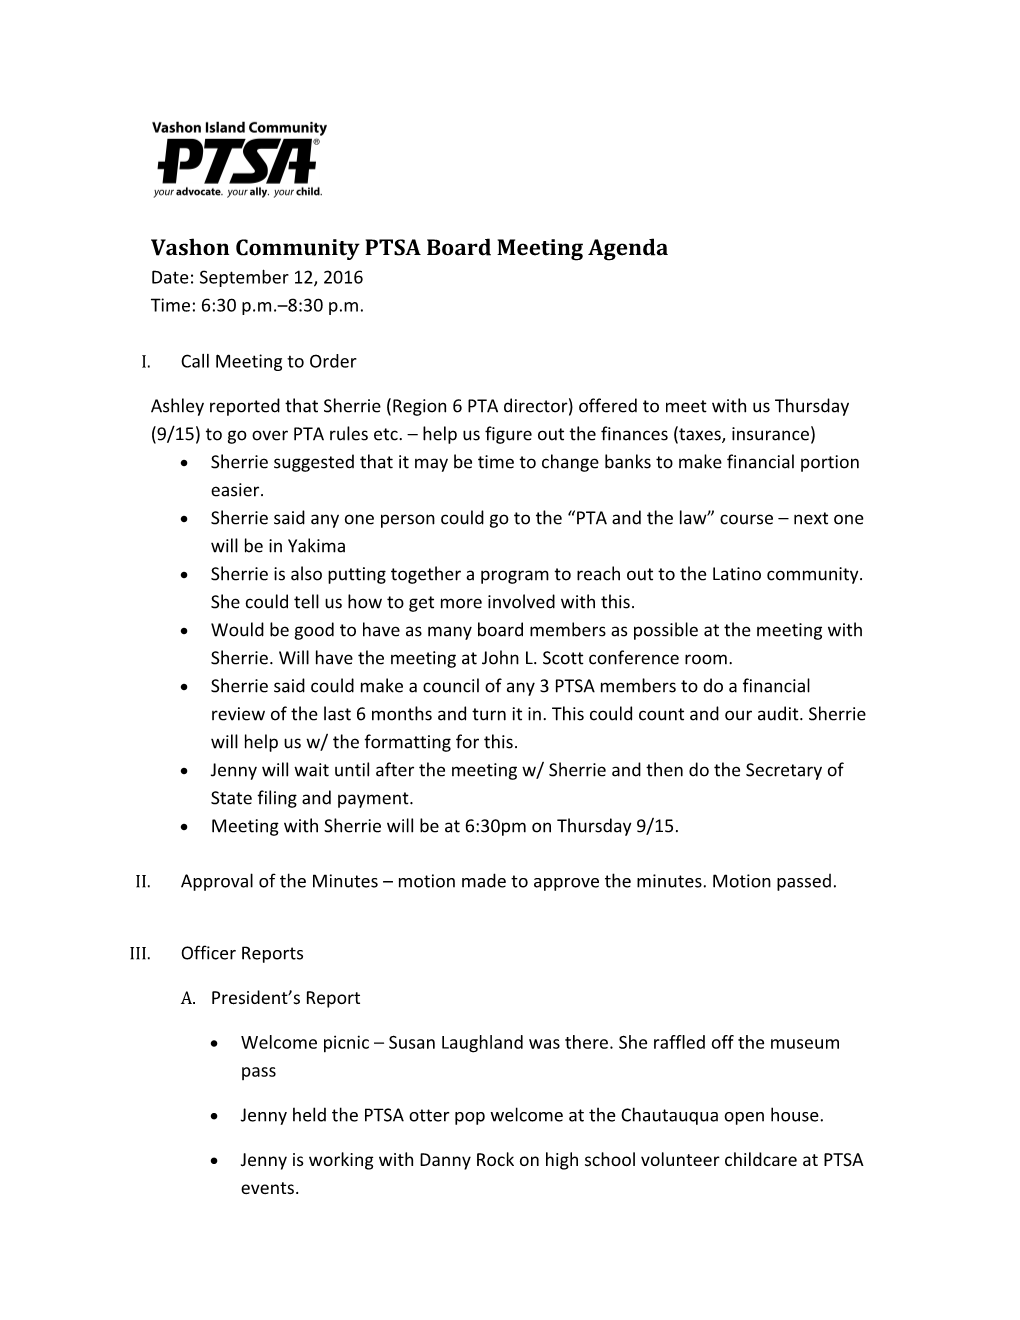 Vashon Community PTSA Board Meeting Agenda